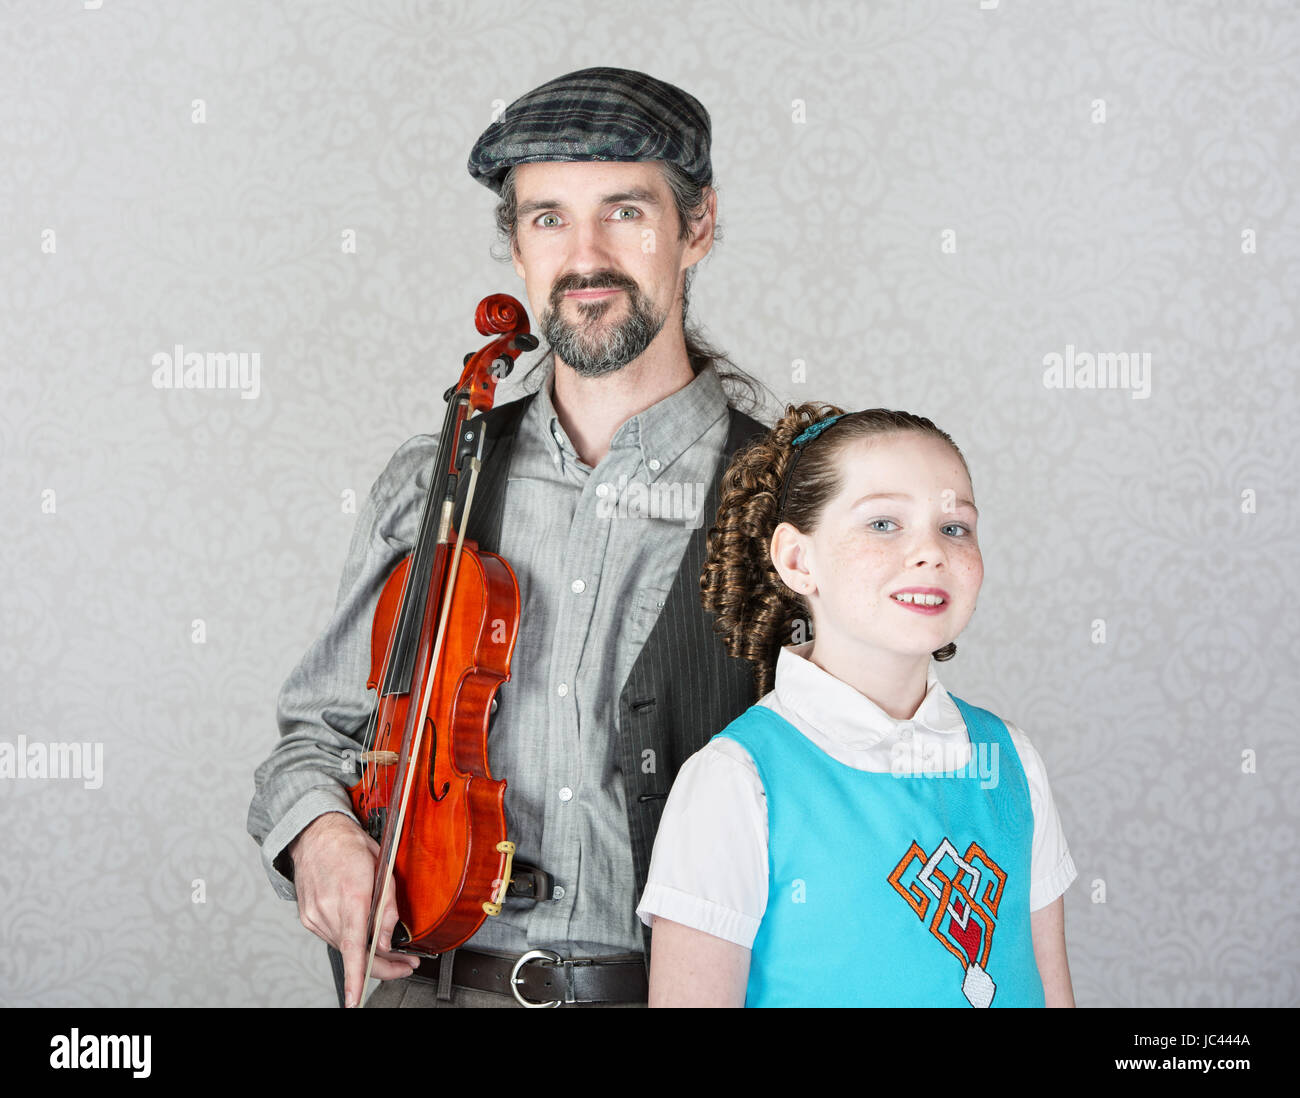 Irish folk music parent holding violin with cute child Stock Photo